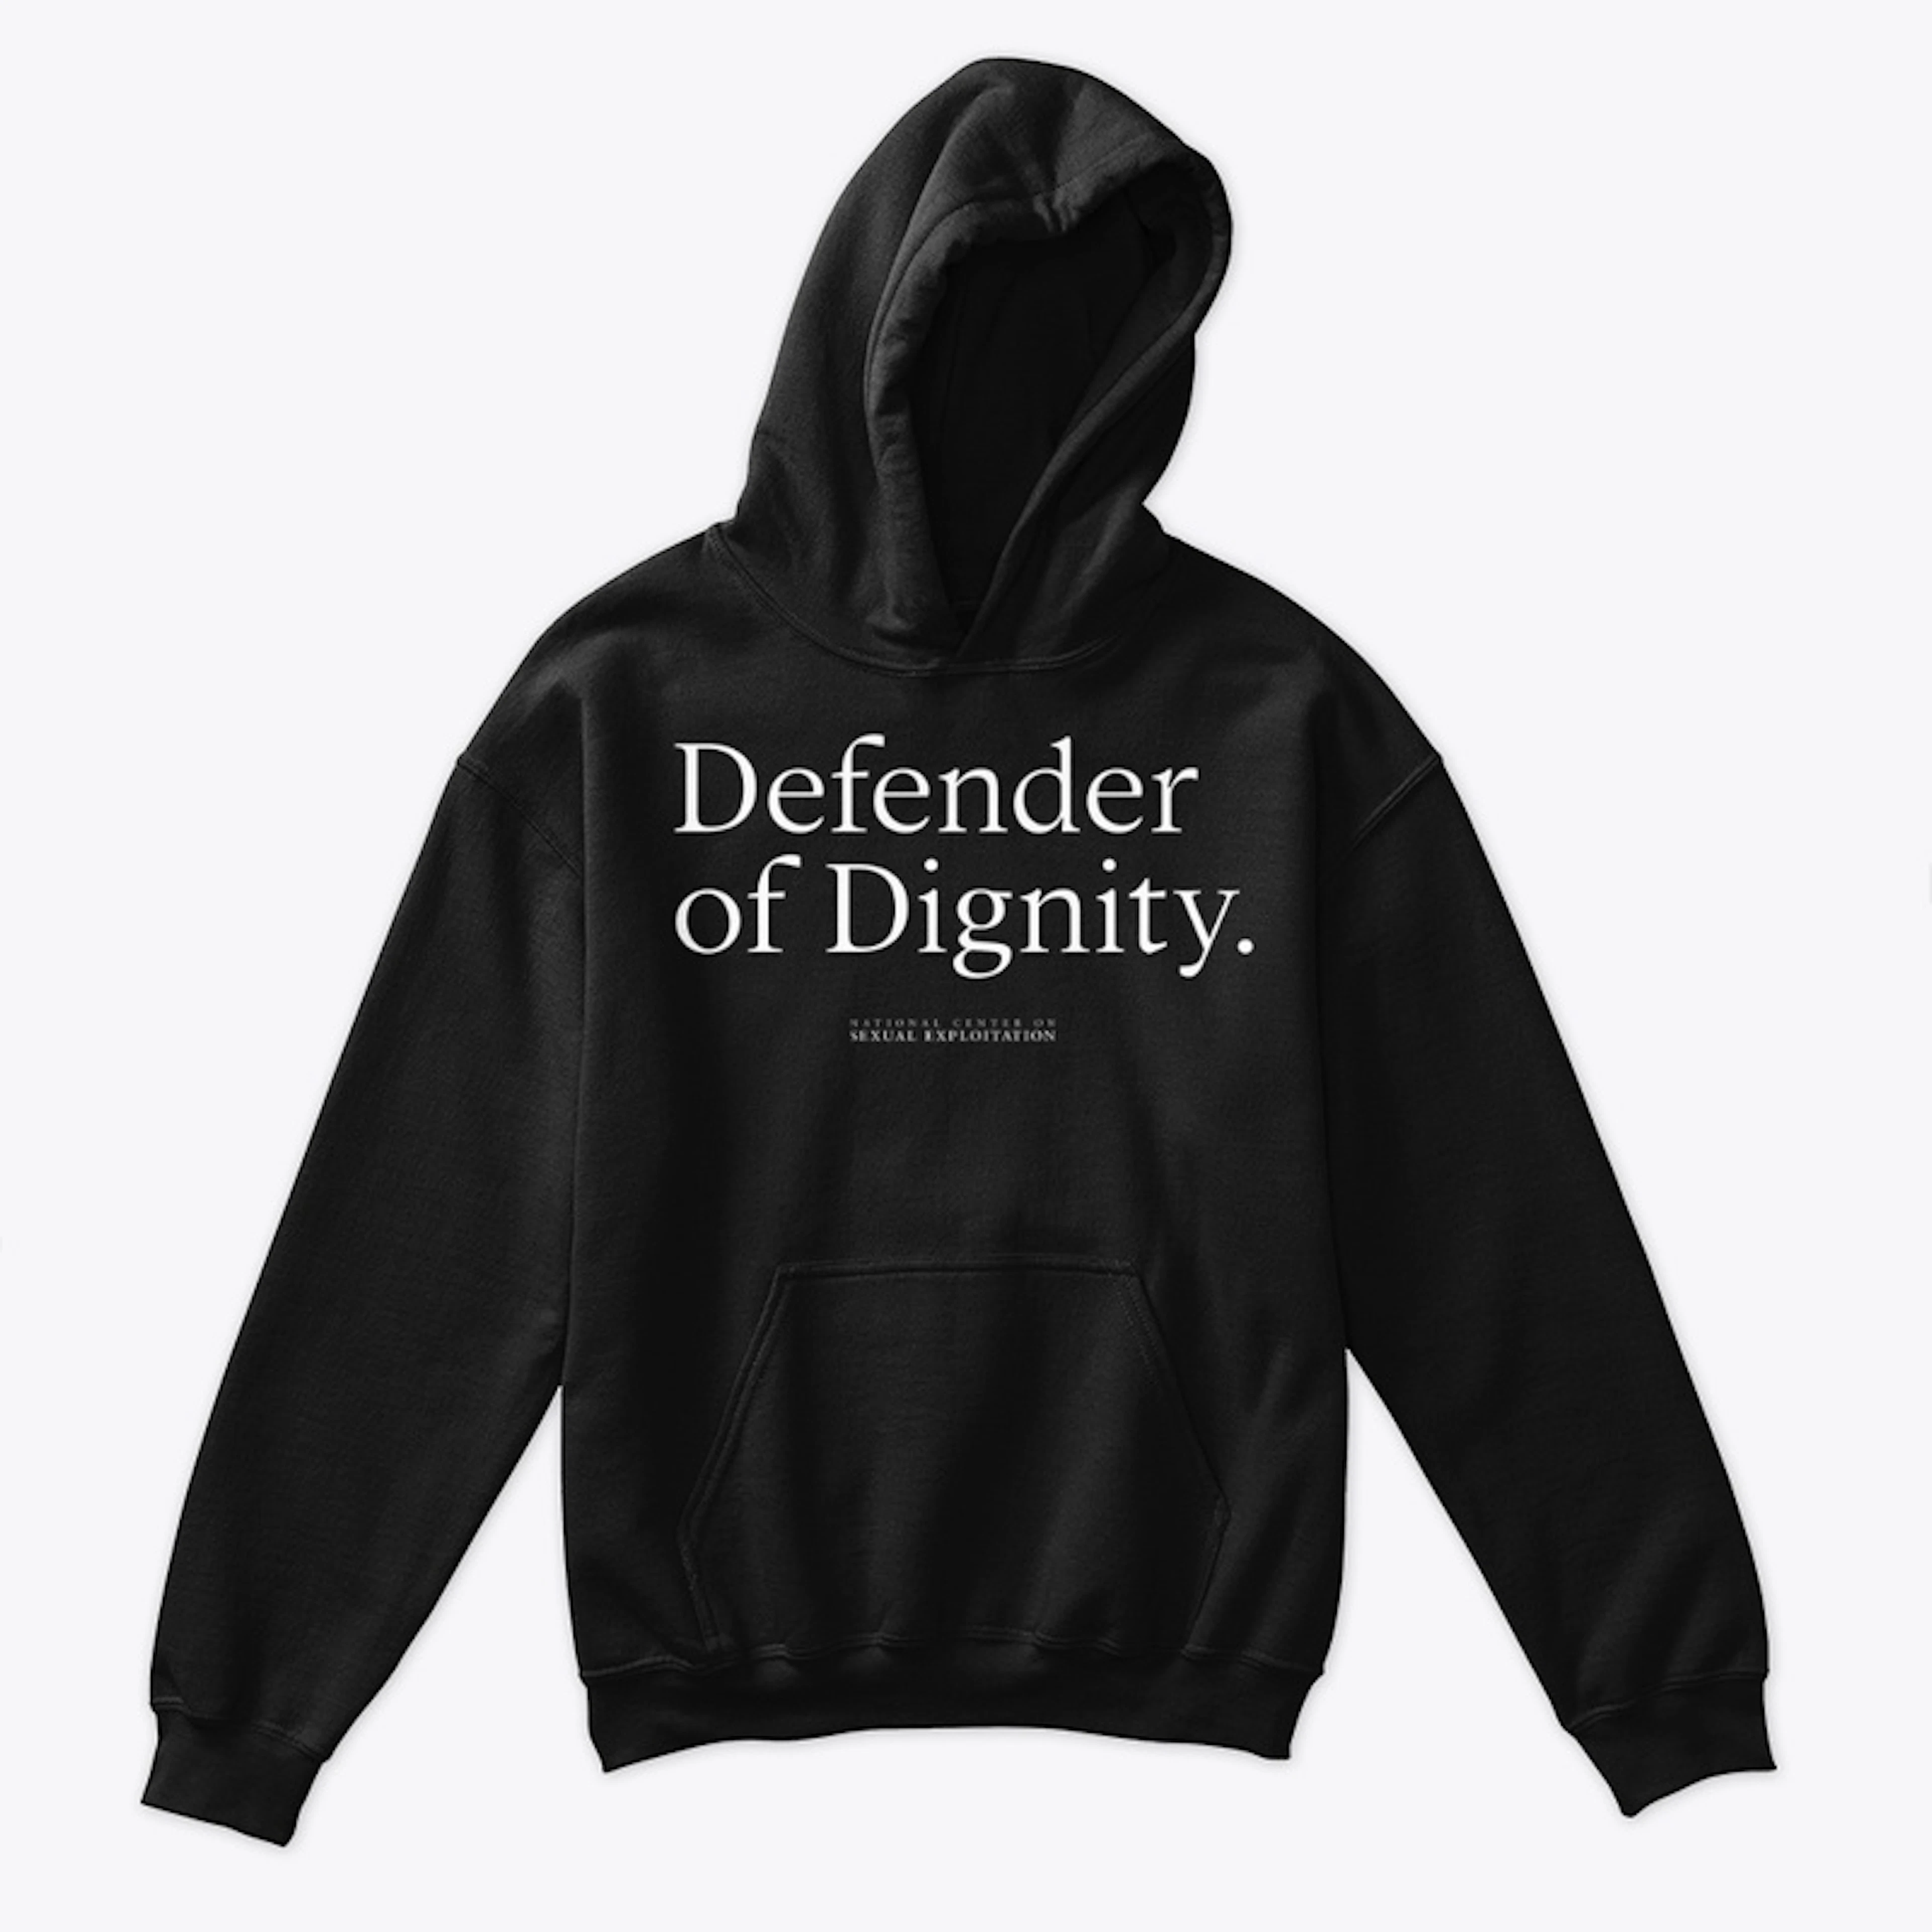  Dignity Defender - Black/White